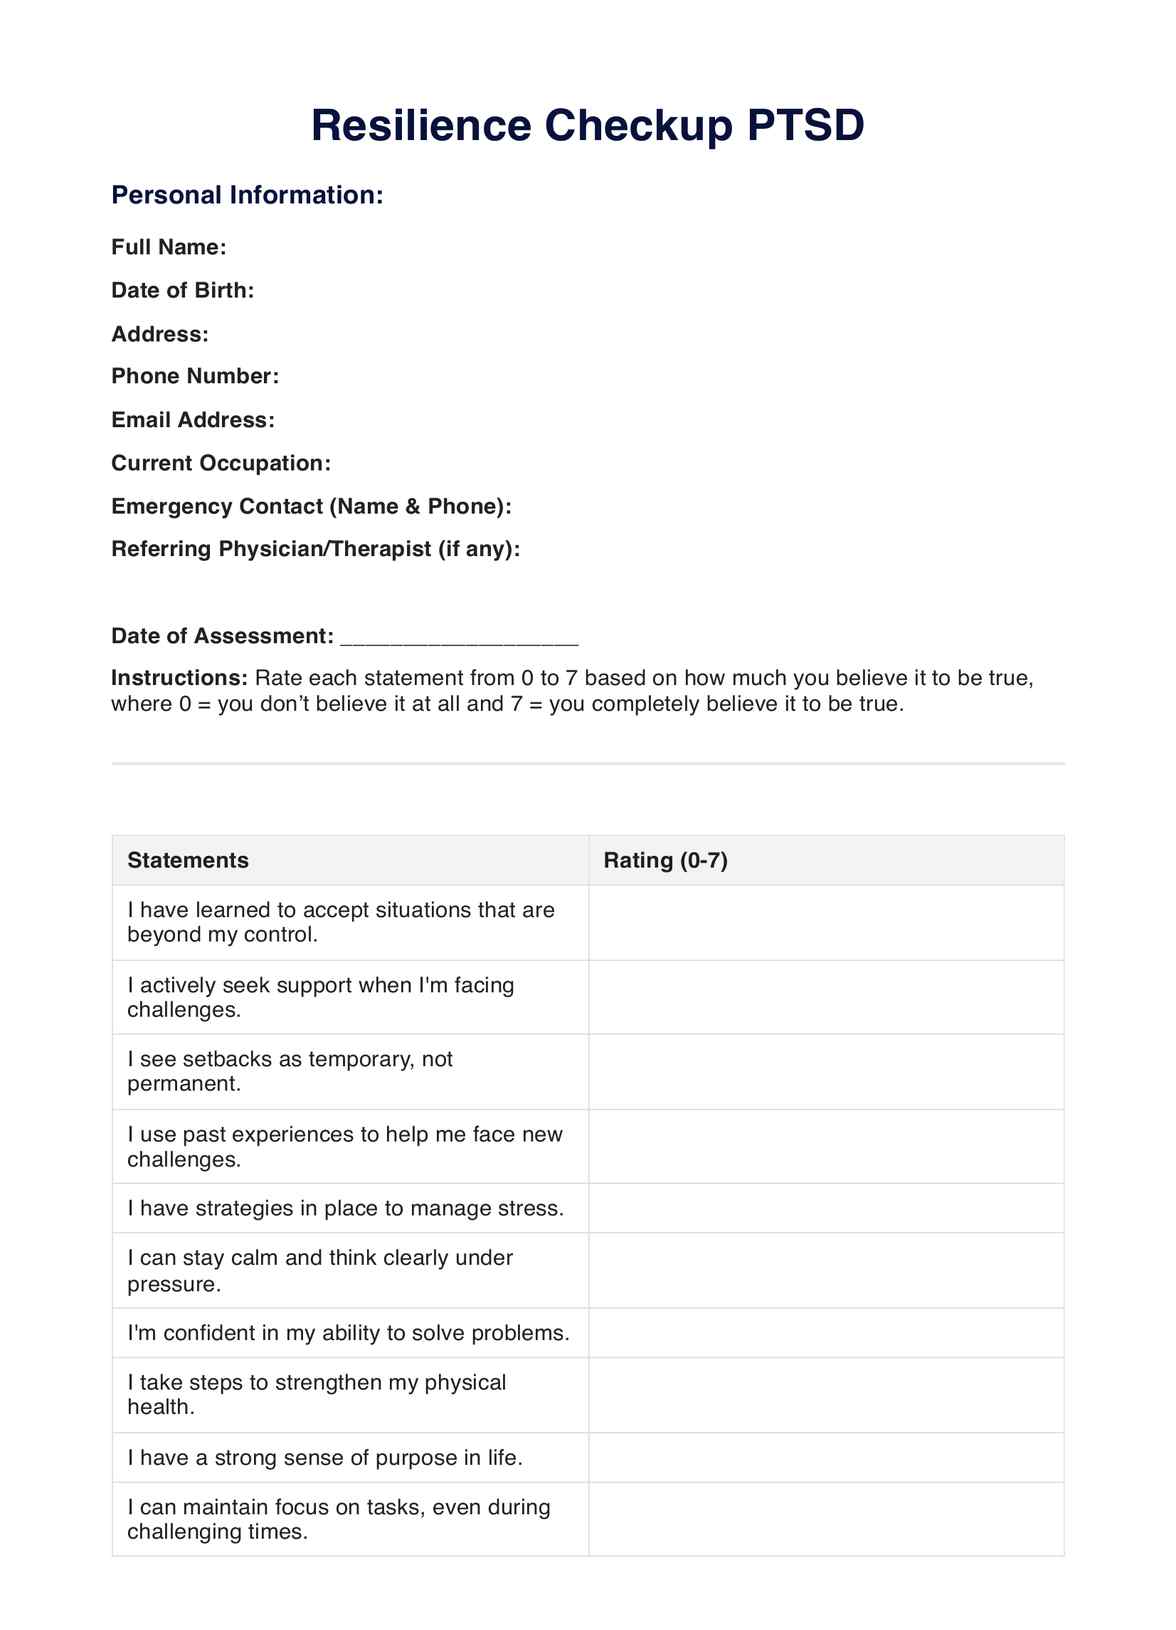 Resilience Checkup PTSD Worksheet PDF Example